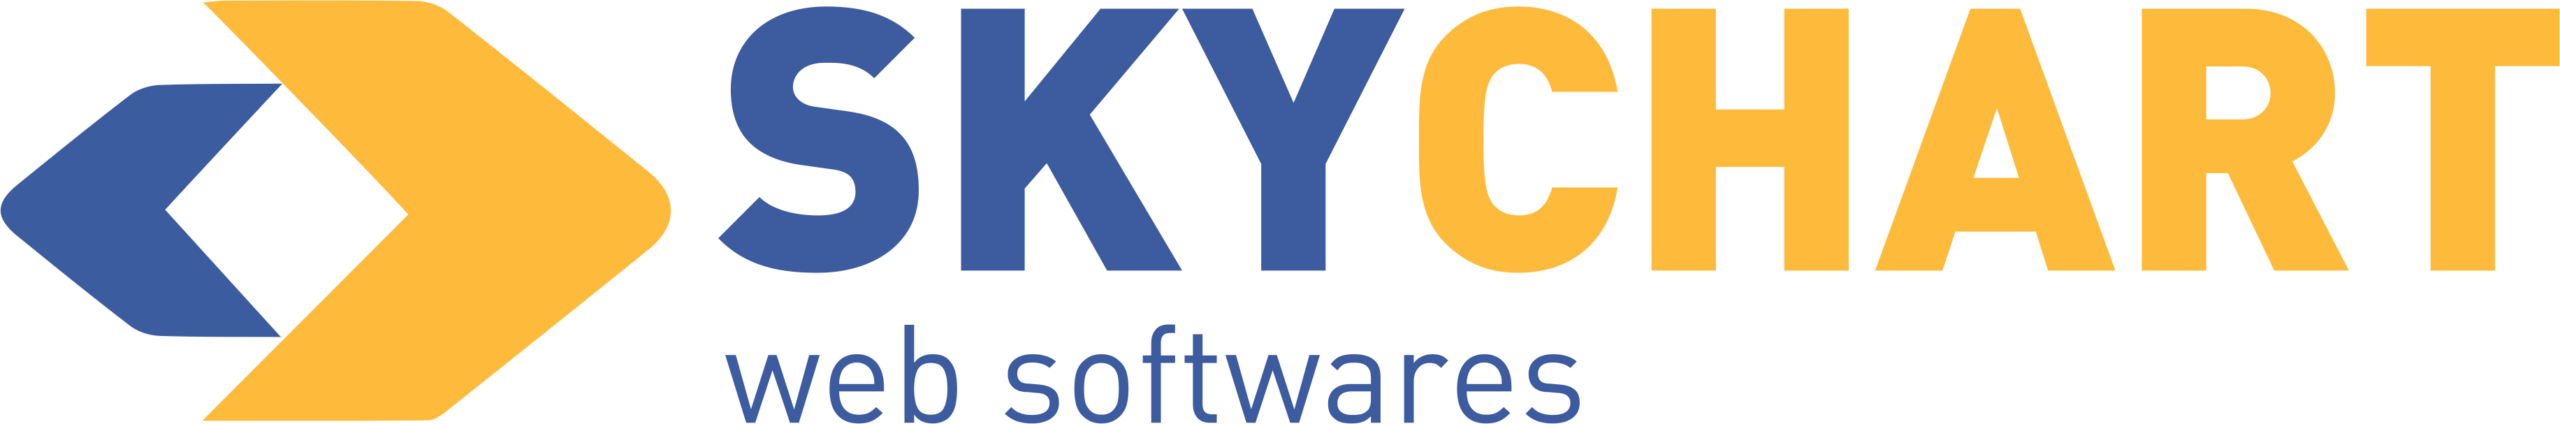 skychart outline